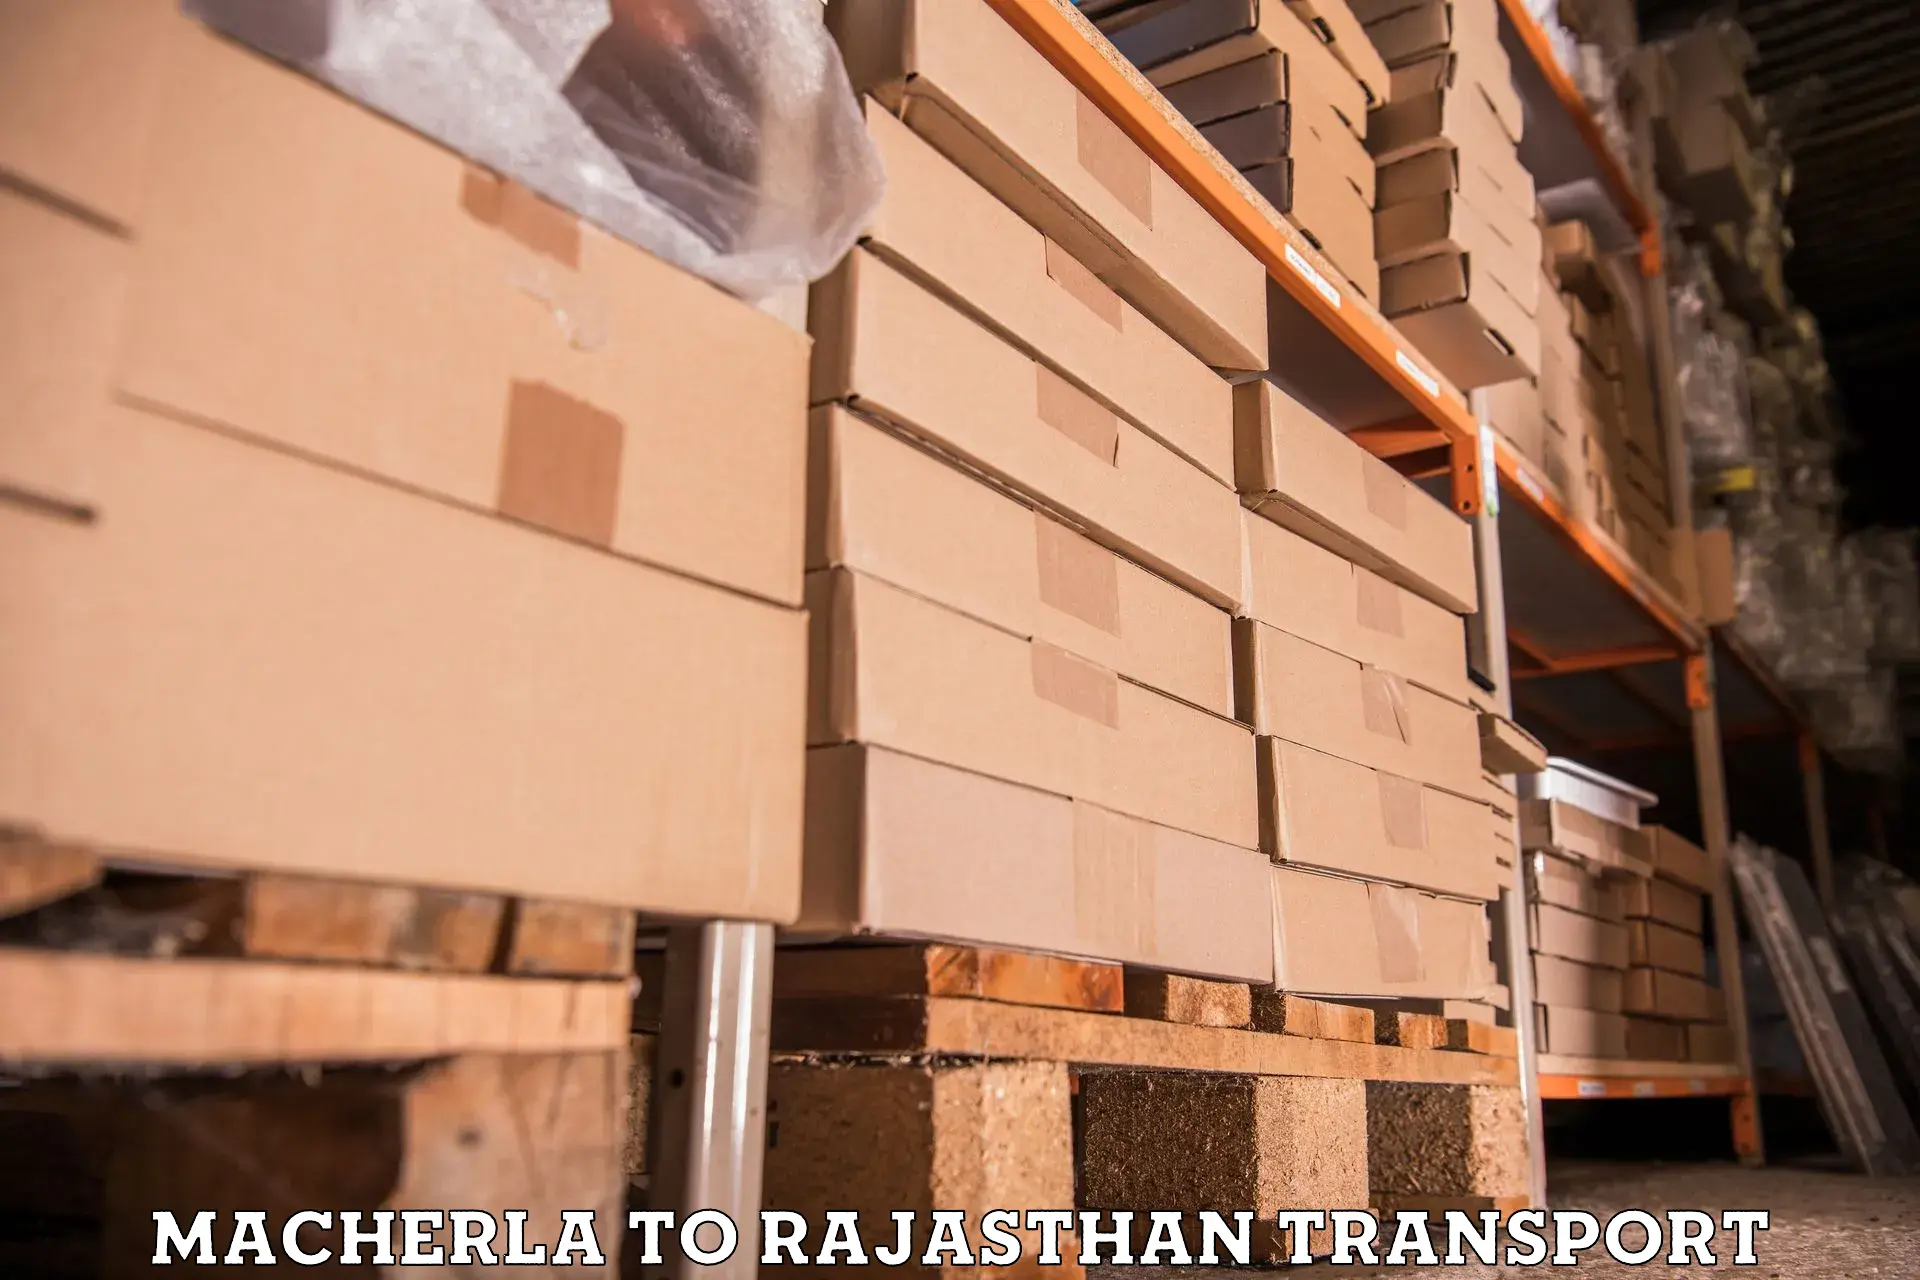 Truck transport companies in India Macherla to Khanpur